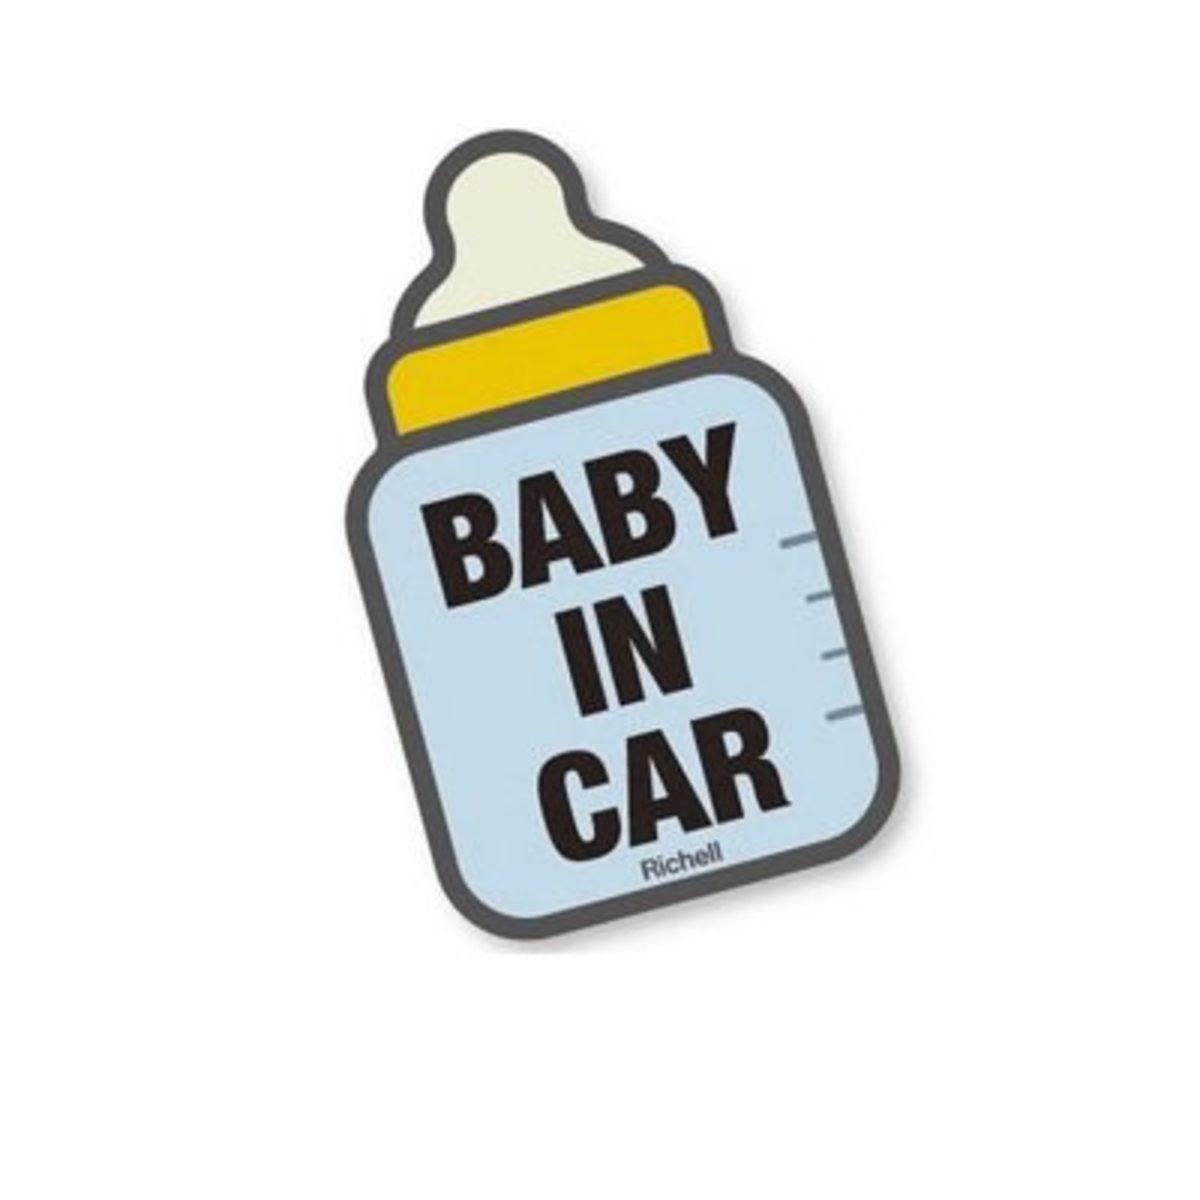 Baby In Car Baby on board Milk Bottle Car Safety Decal Sticker 